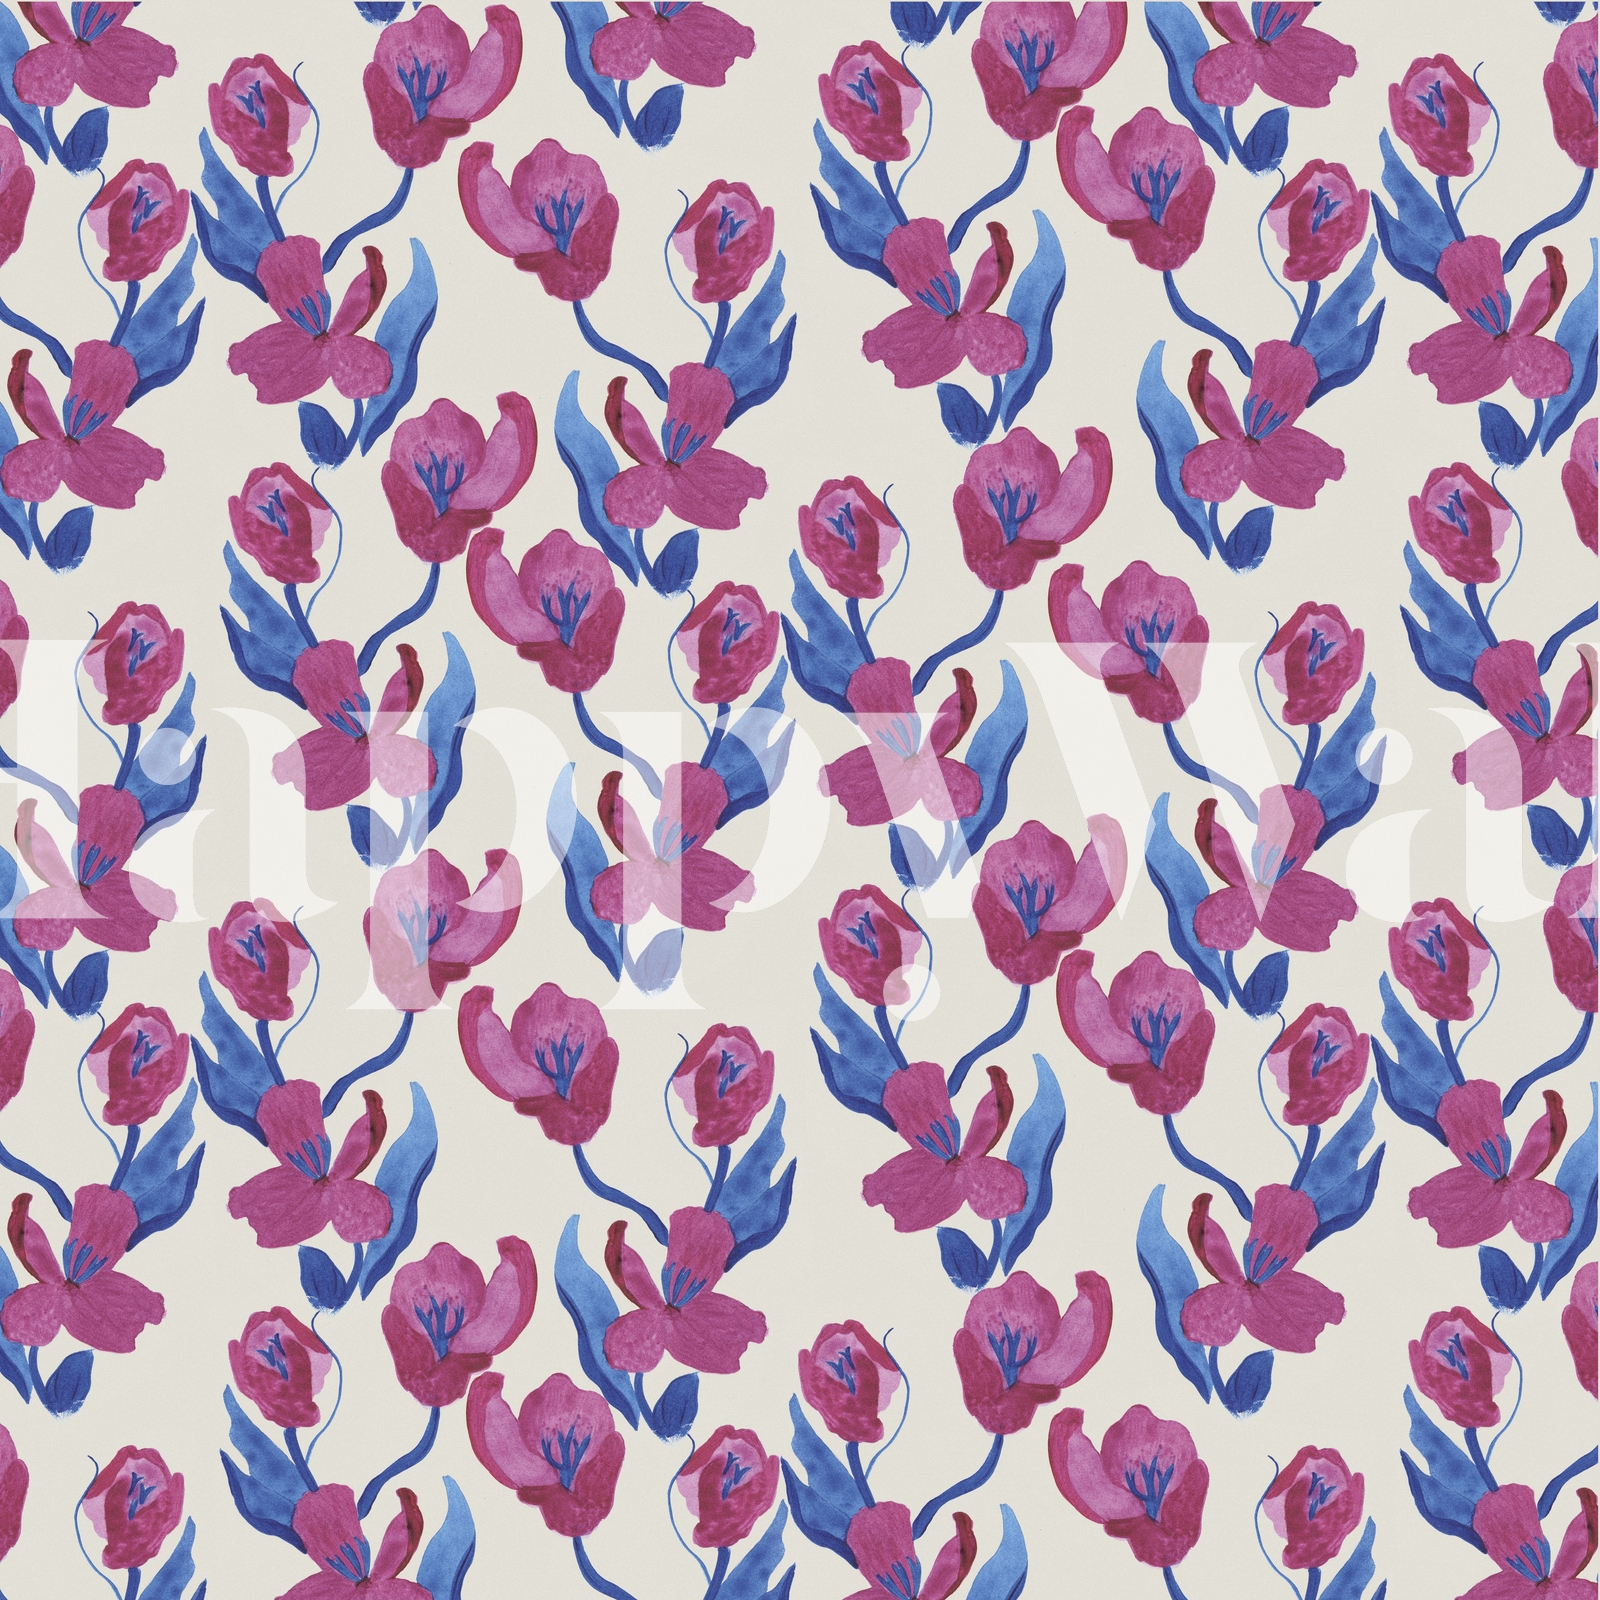 Buy Pink blue Flower wallpaper - Free shipping